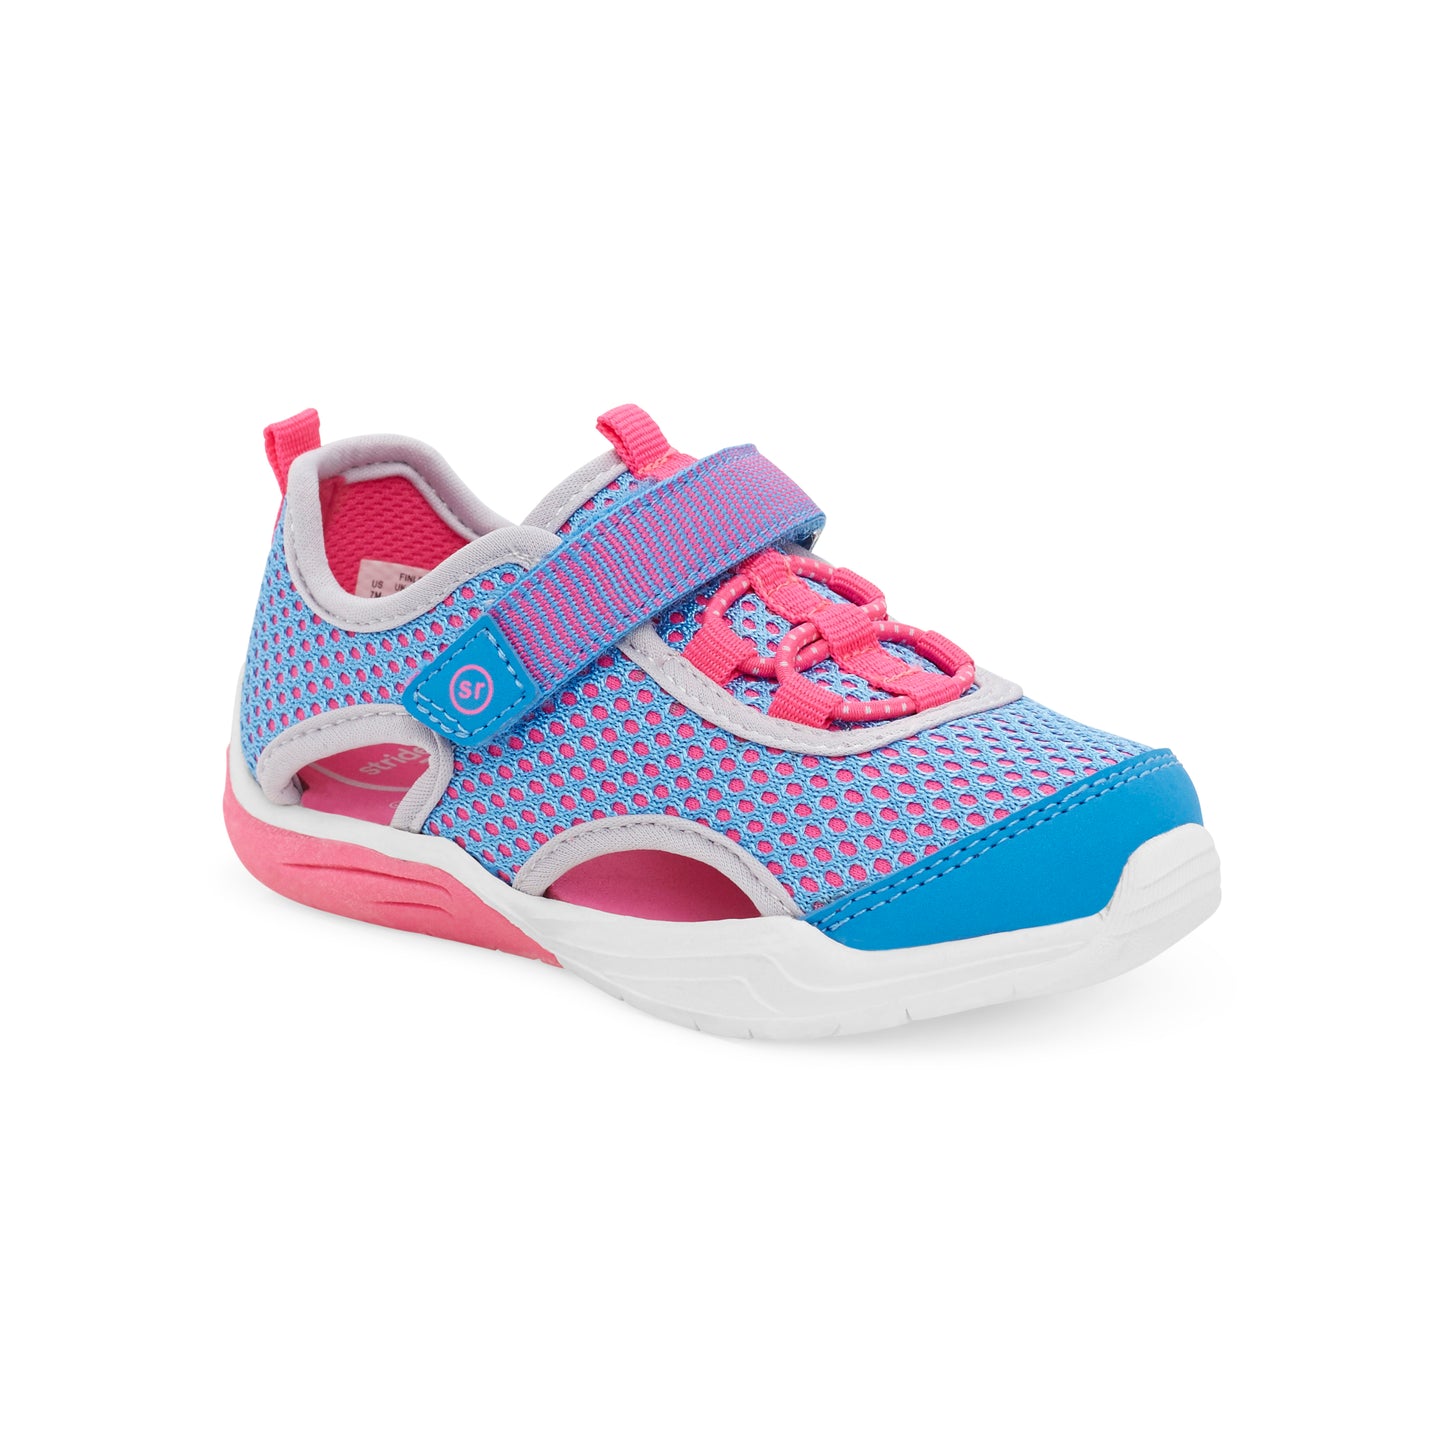 Finley Sneaker Sandal Pink